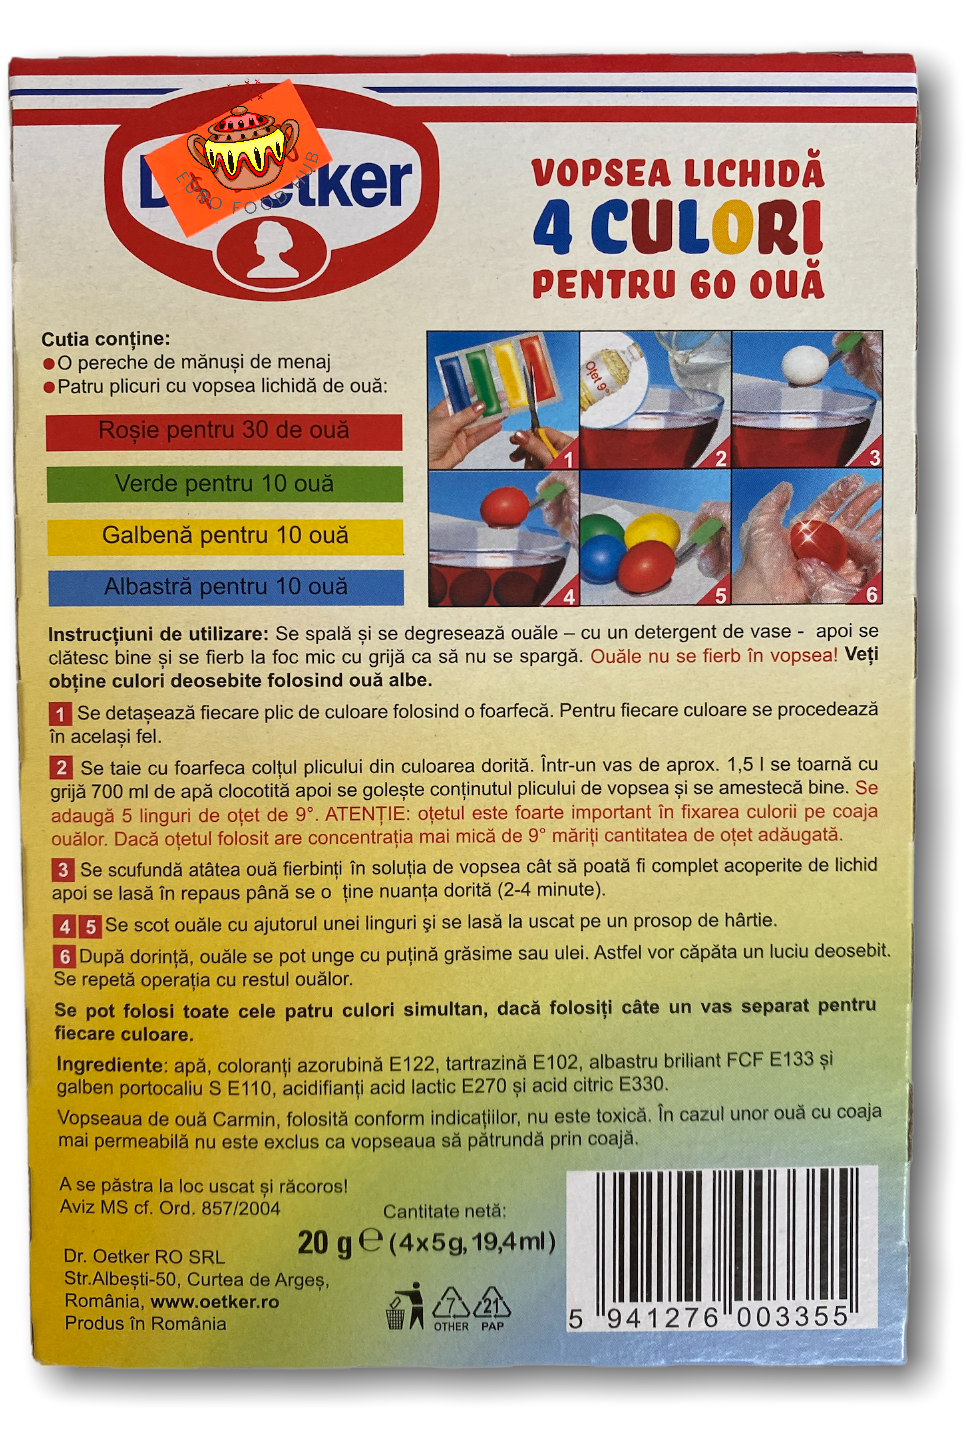 Dr. Oetker - Carmin - Vopsea Oua 4 Culori - Easter Egg Dye - 4 Color Kit